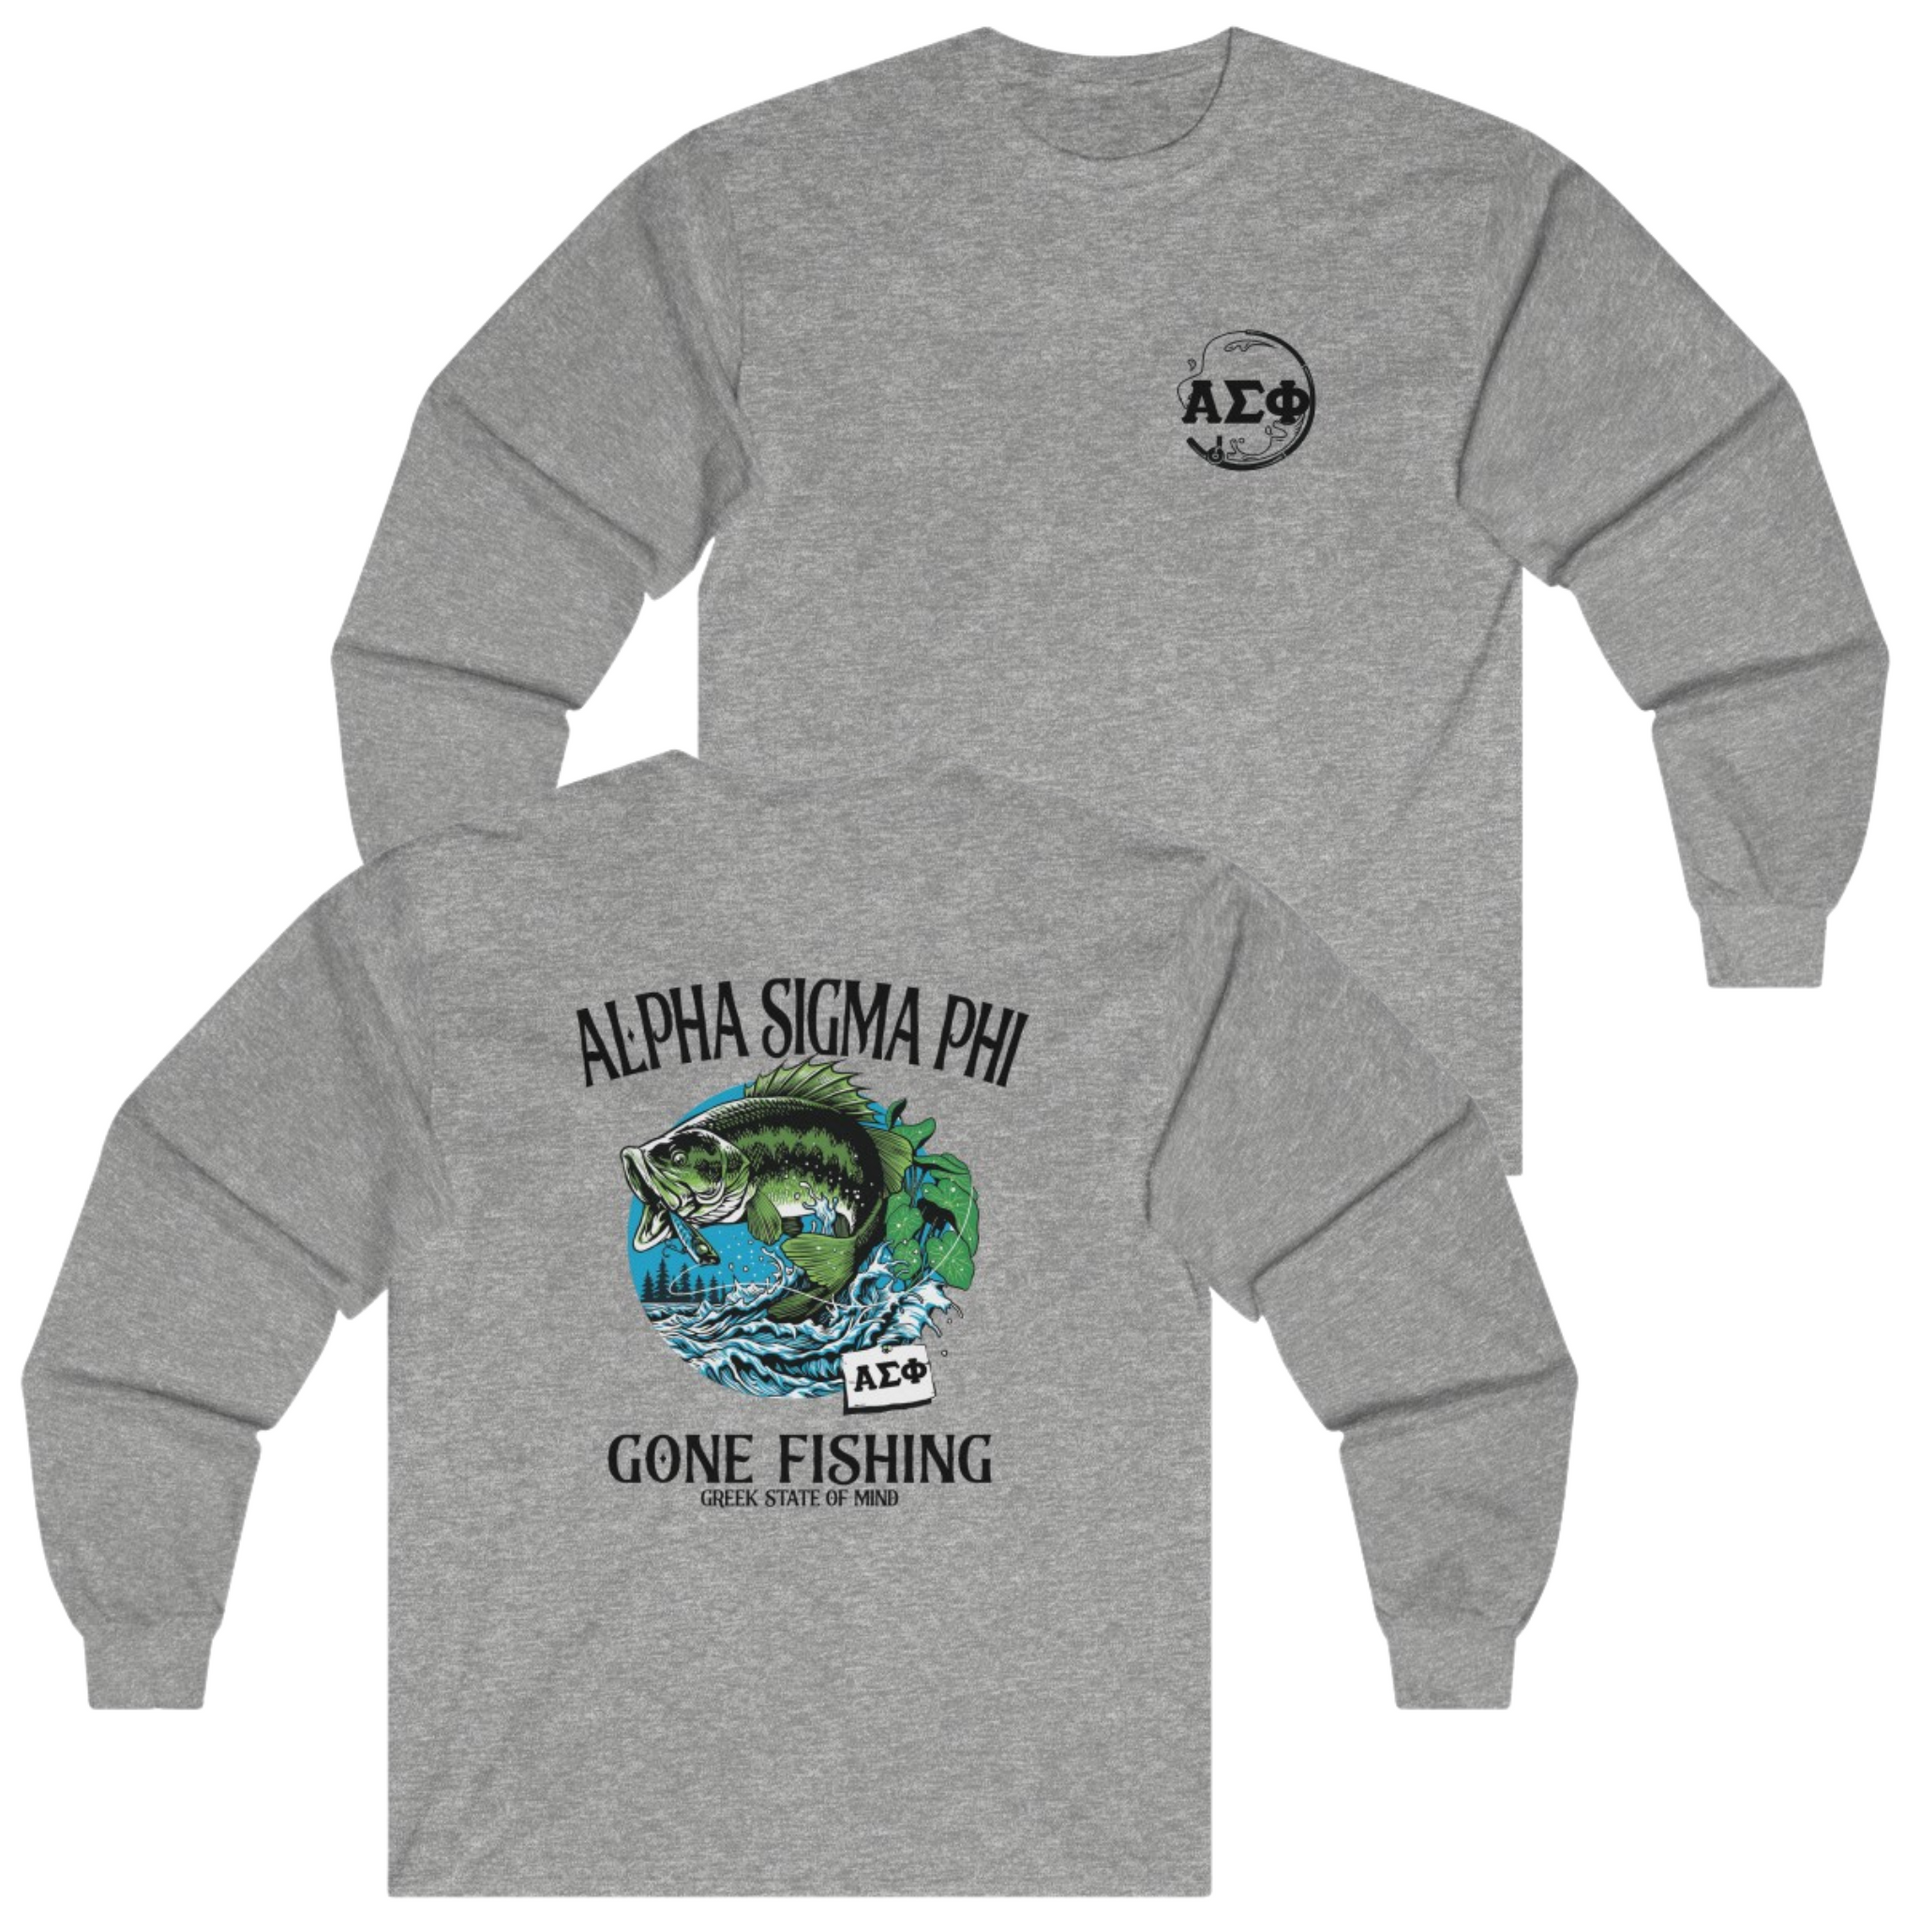 Grey Alpha Sigma Phi Graphic Long Sleeve T-Shirt | Gone Fishing | Fraternity Shirt